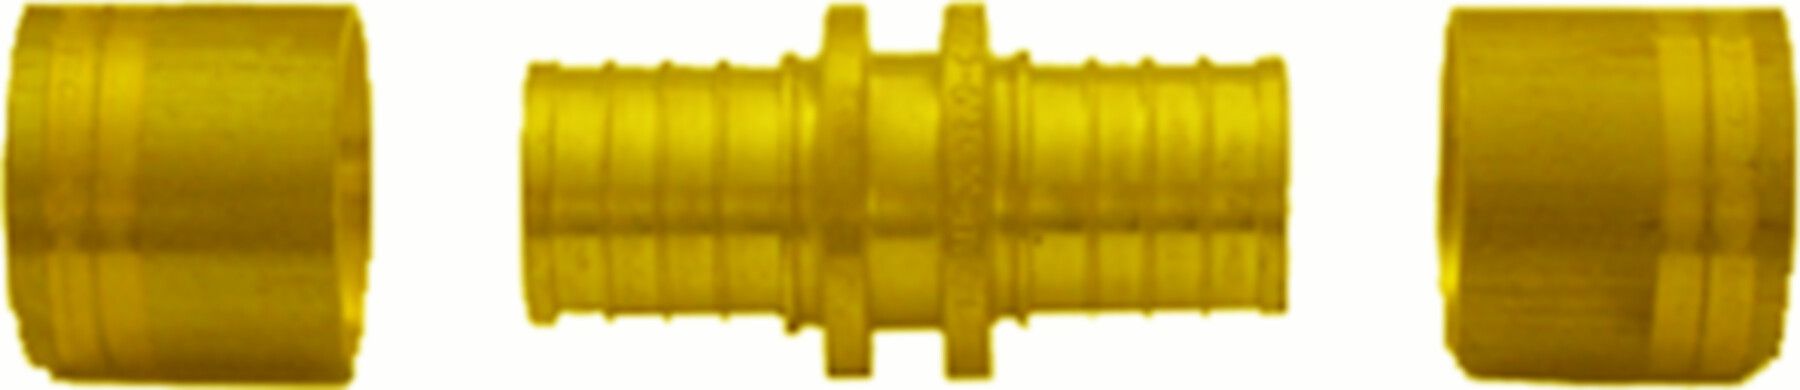 Press-Verbindungskupplung PVK H - 32 ø 32/2.9 mm - Isopex Fernwärmeleitung